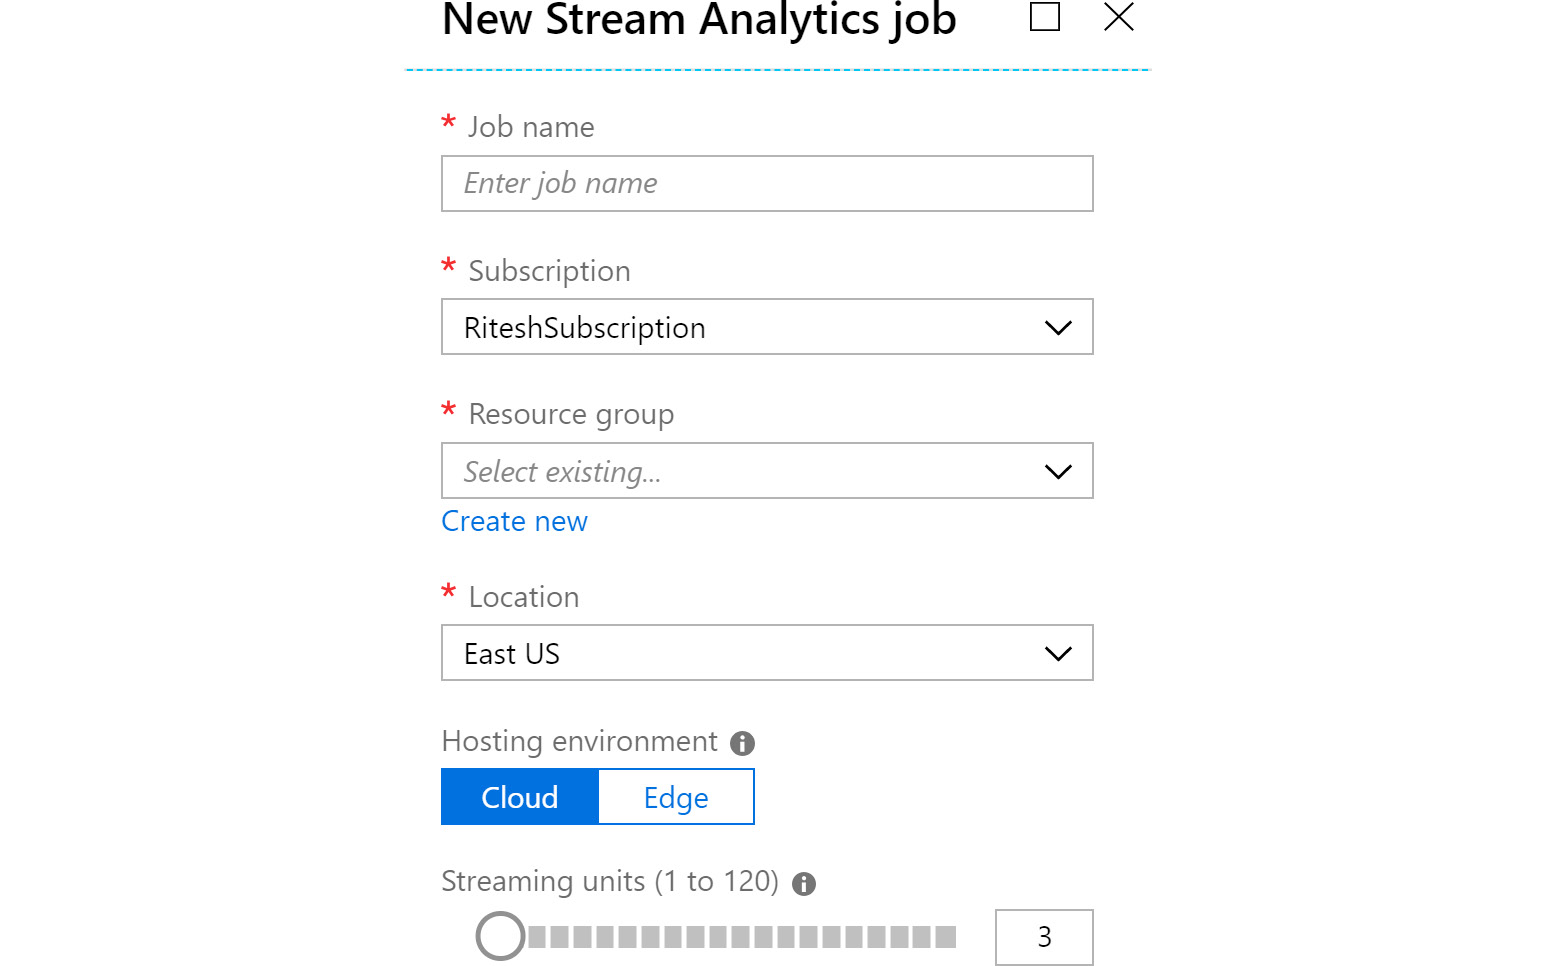 Creating a new Stream Analytics job